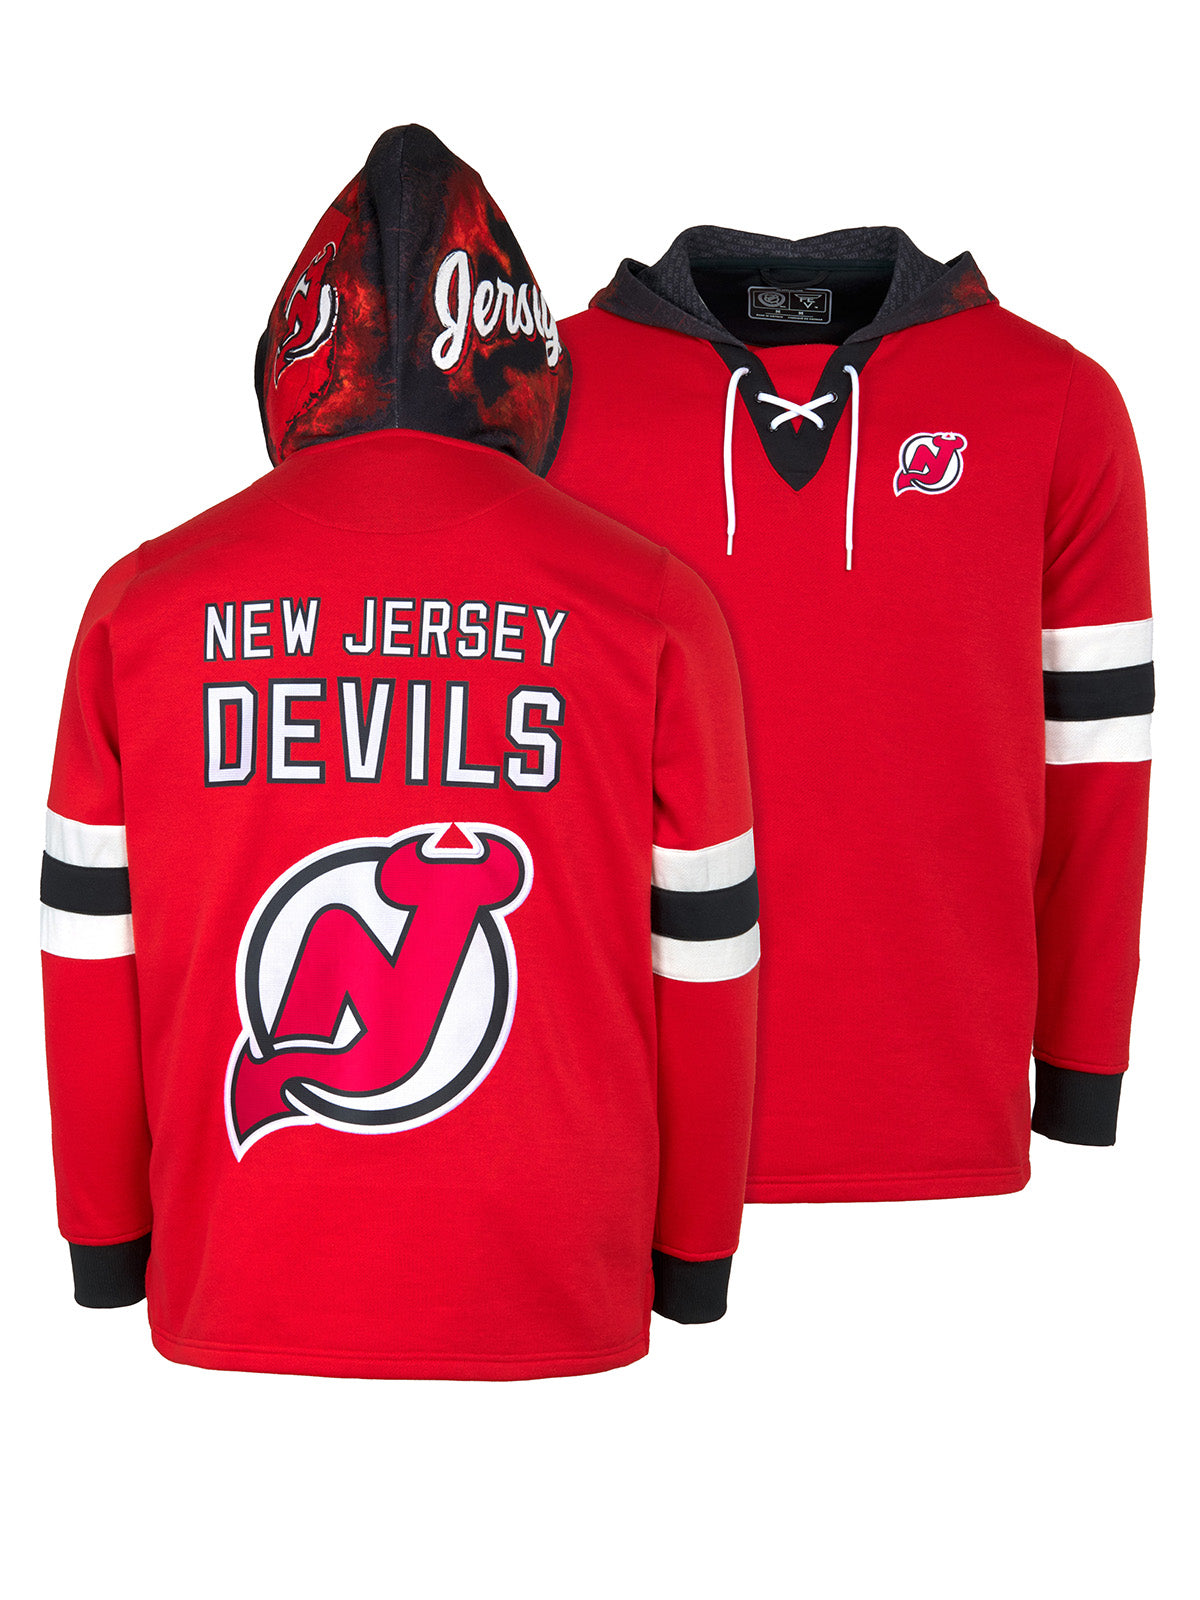 Devils gameday jersey